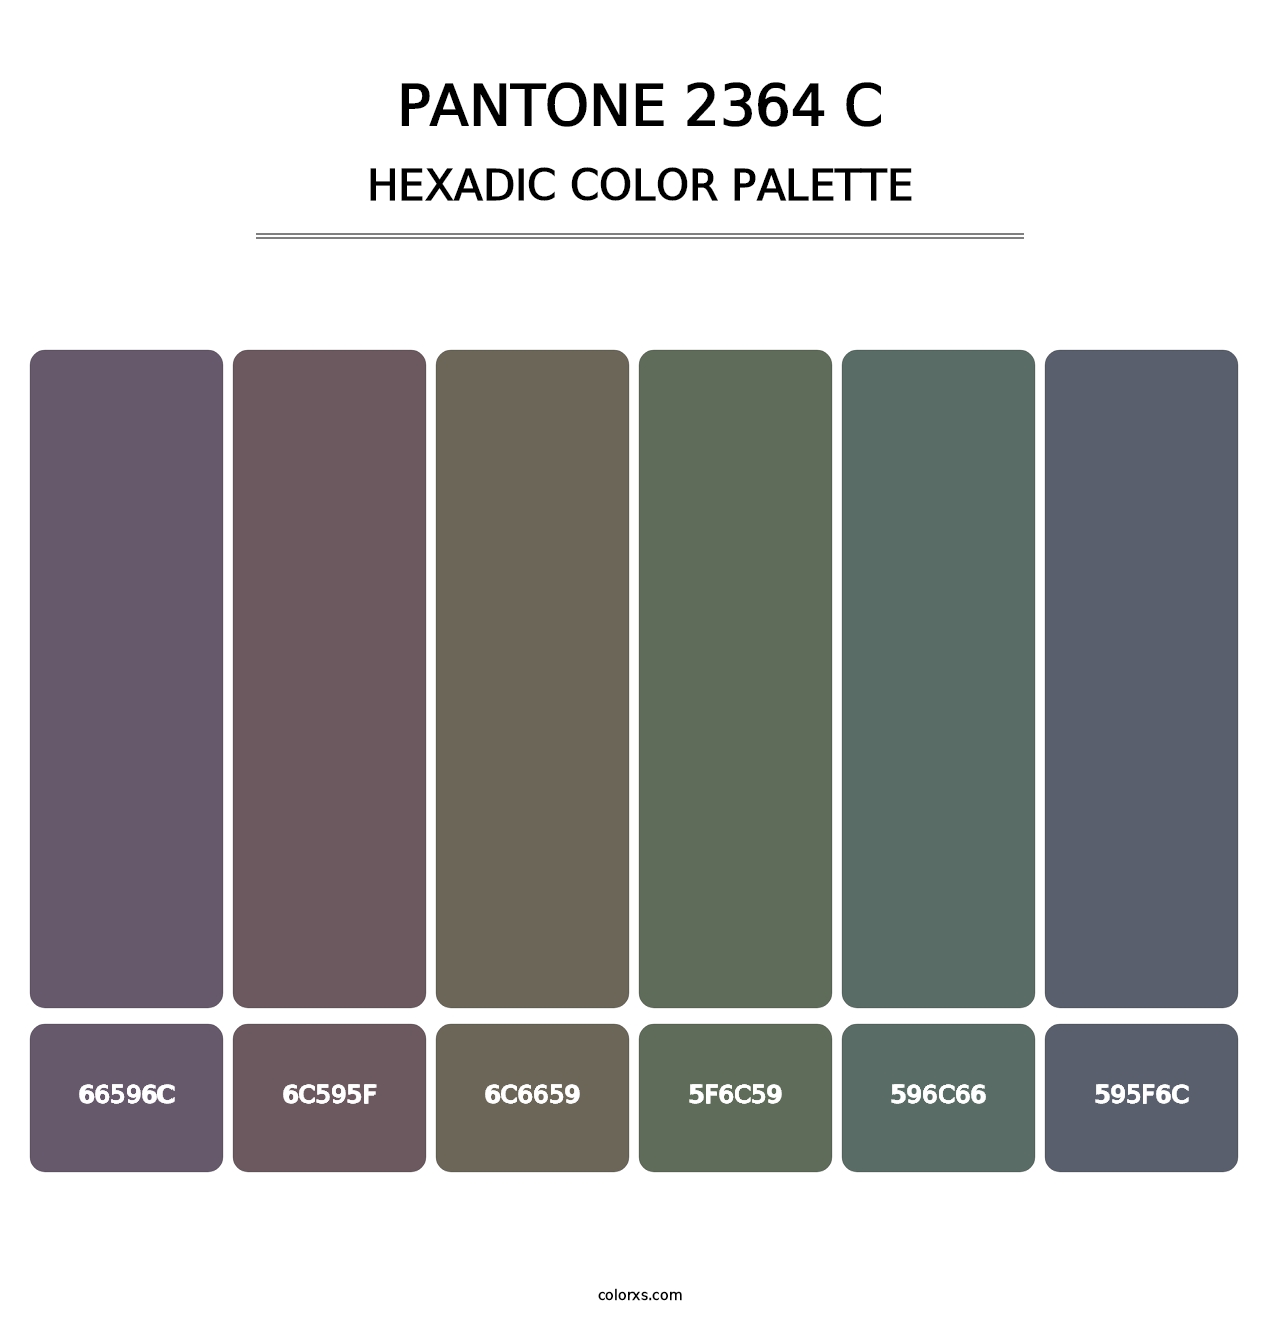 PANTONE 2364 C - Hexadic Color Palette